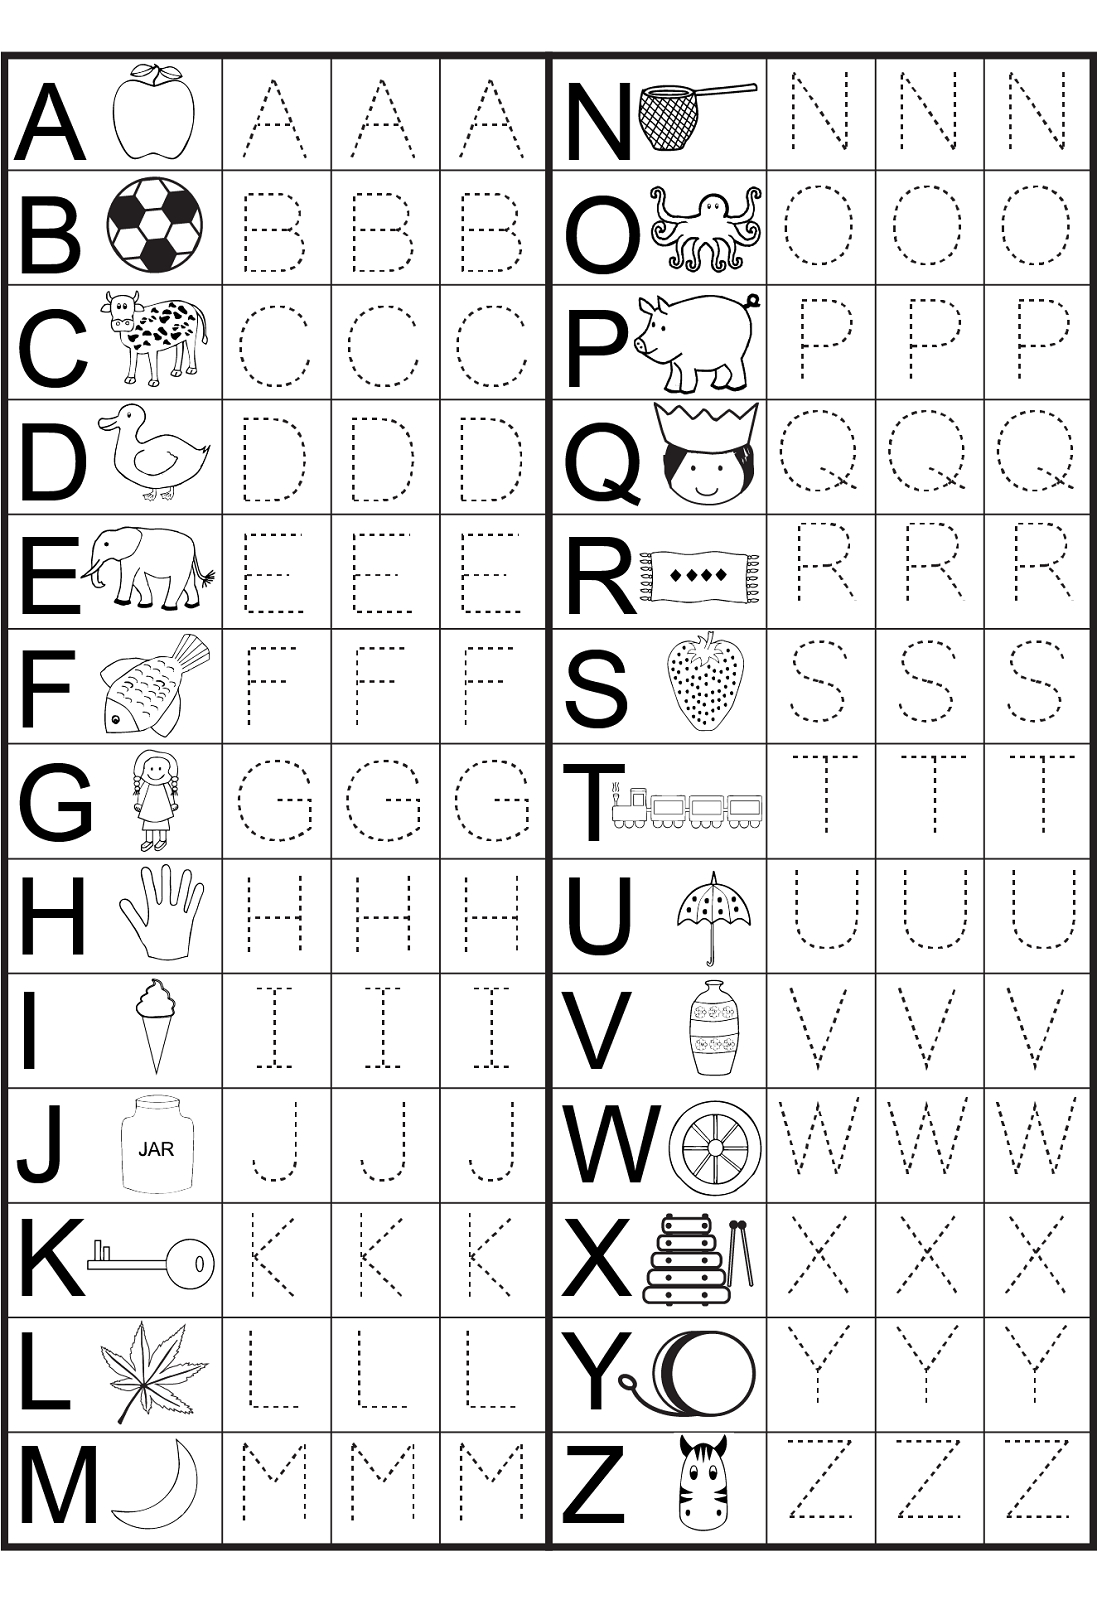 Kindergarten Alphabet Worksheets To Print | Preschool with Alphabet Tracing For 4 Year Old